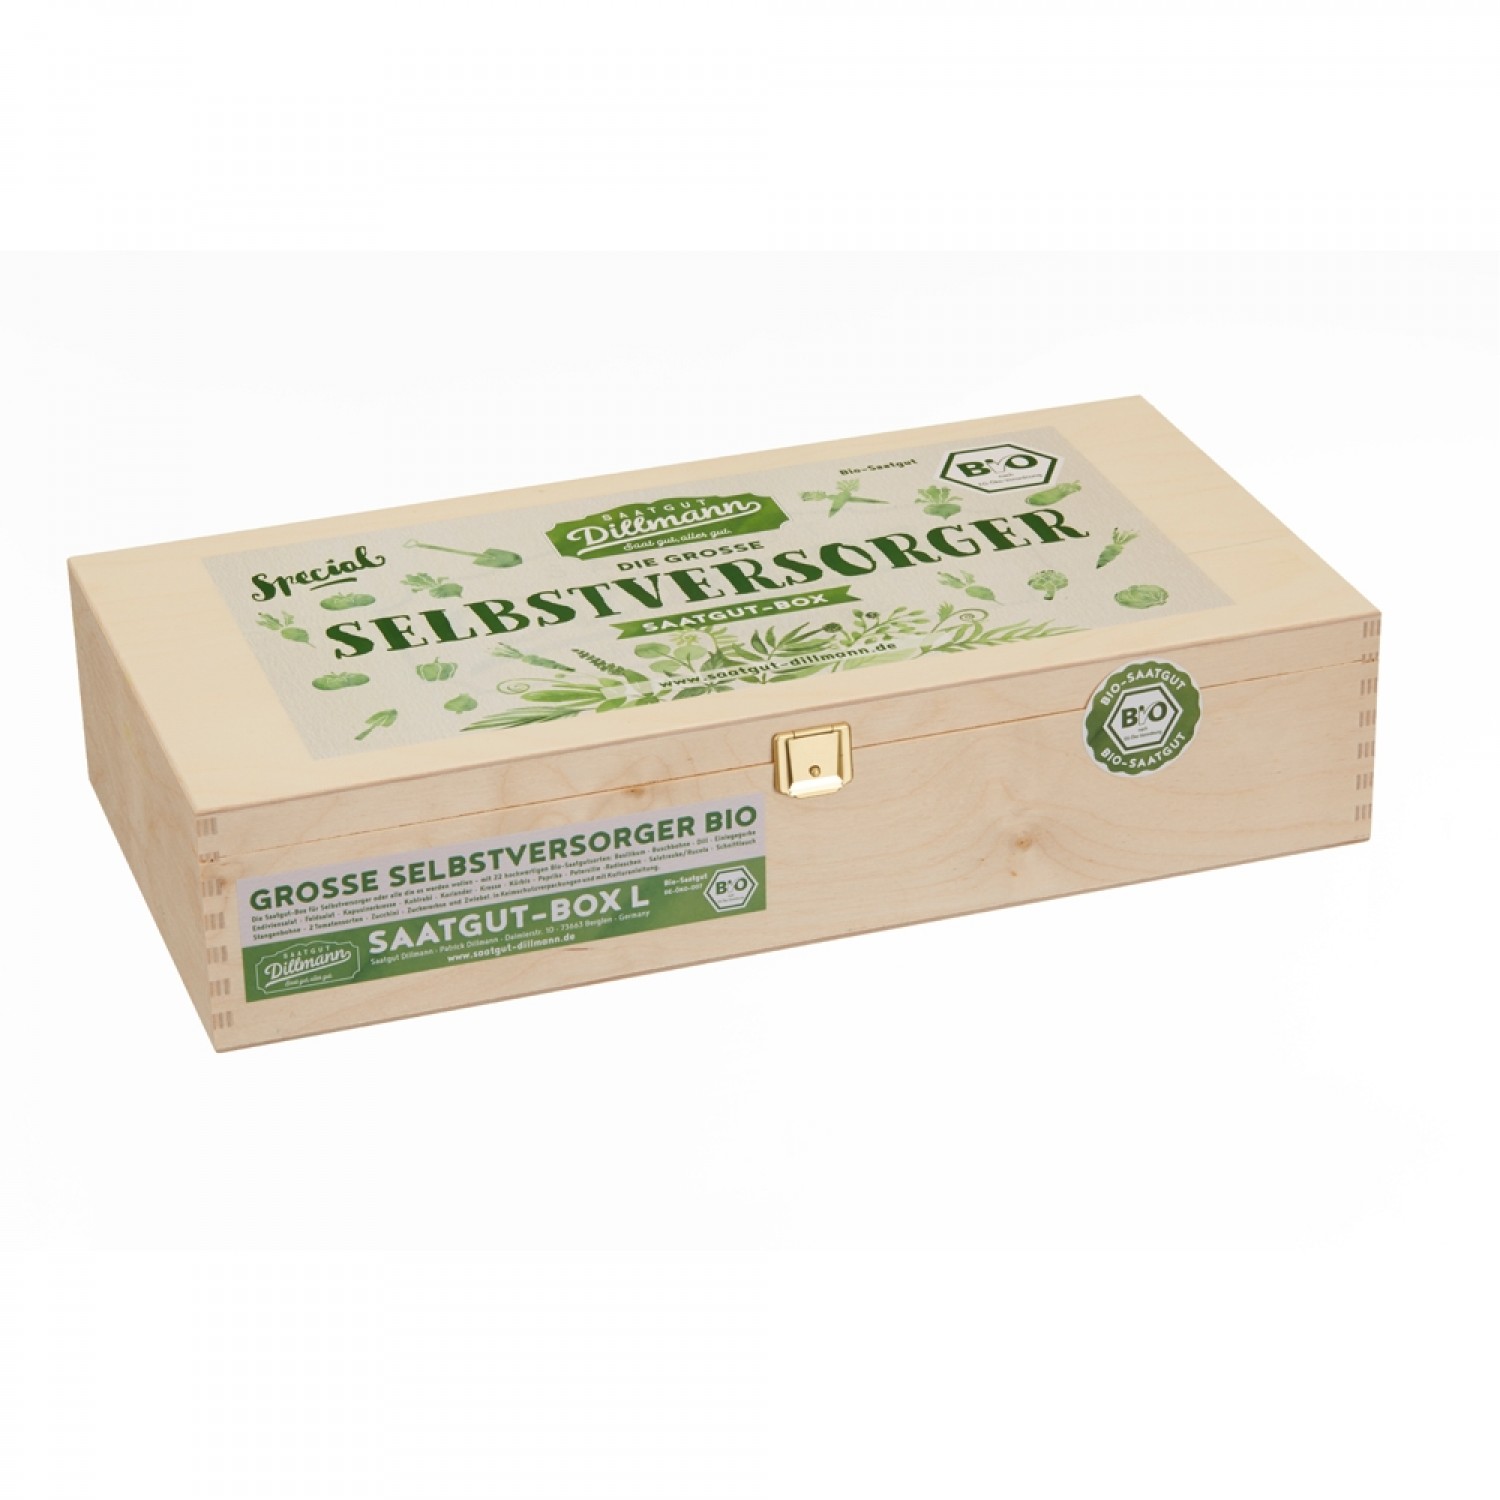 Self-supply Seeds-Box L 22 organic vegetable & herbs seeds | Dillmann